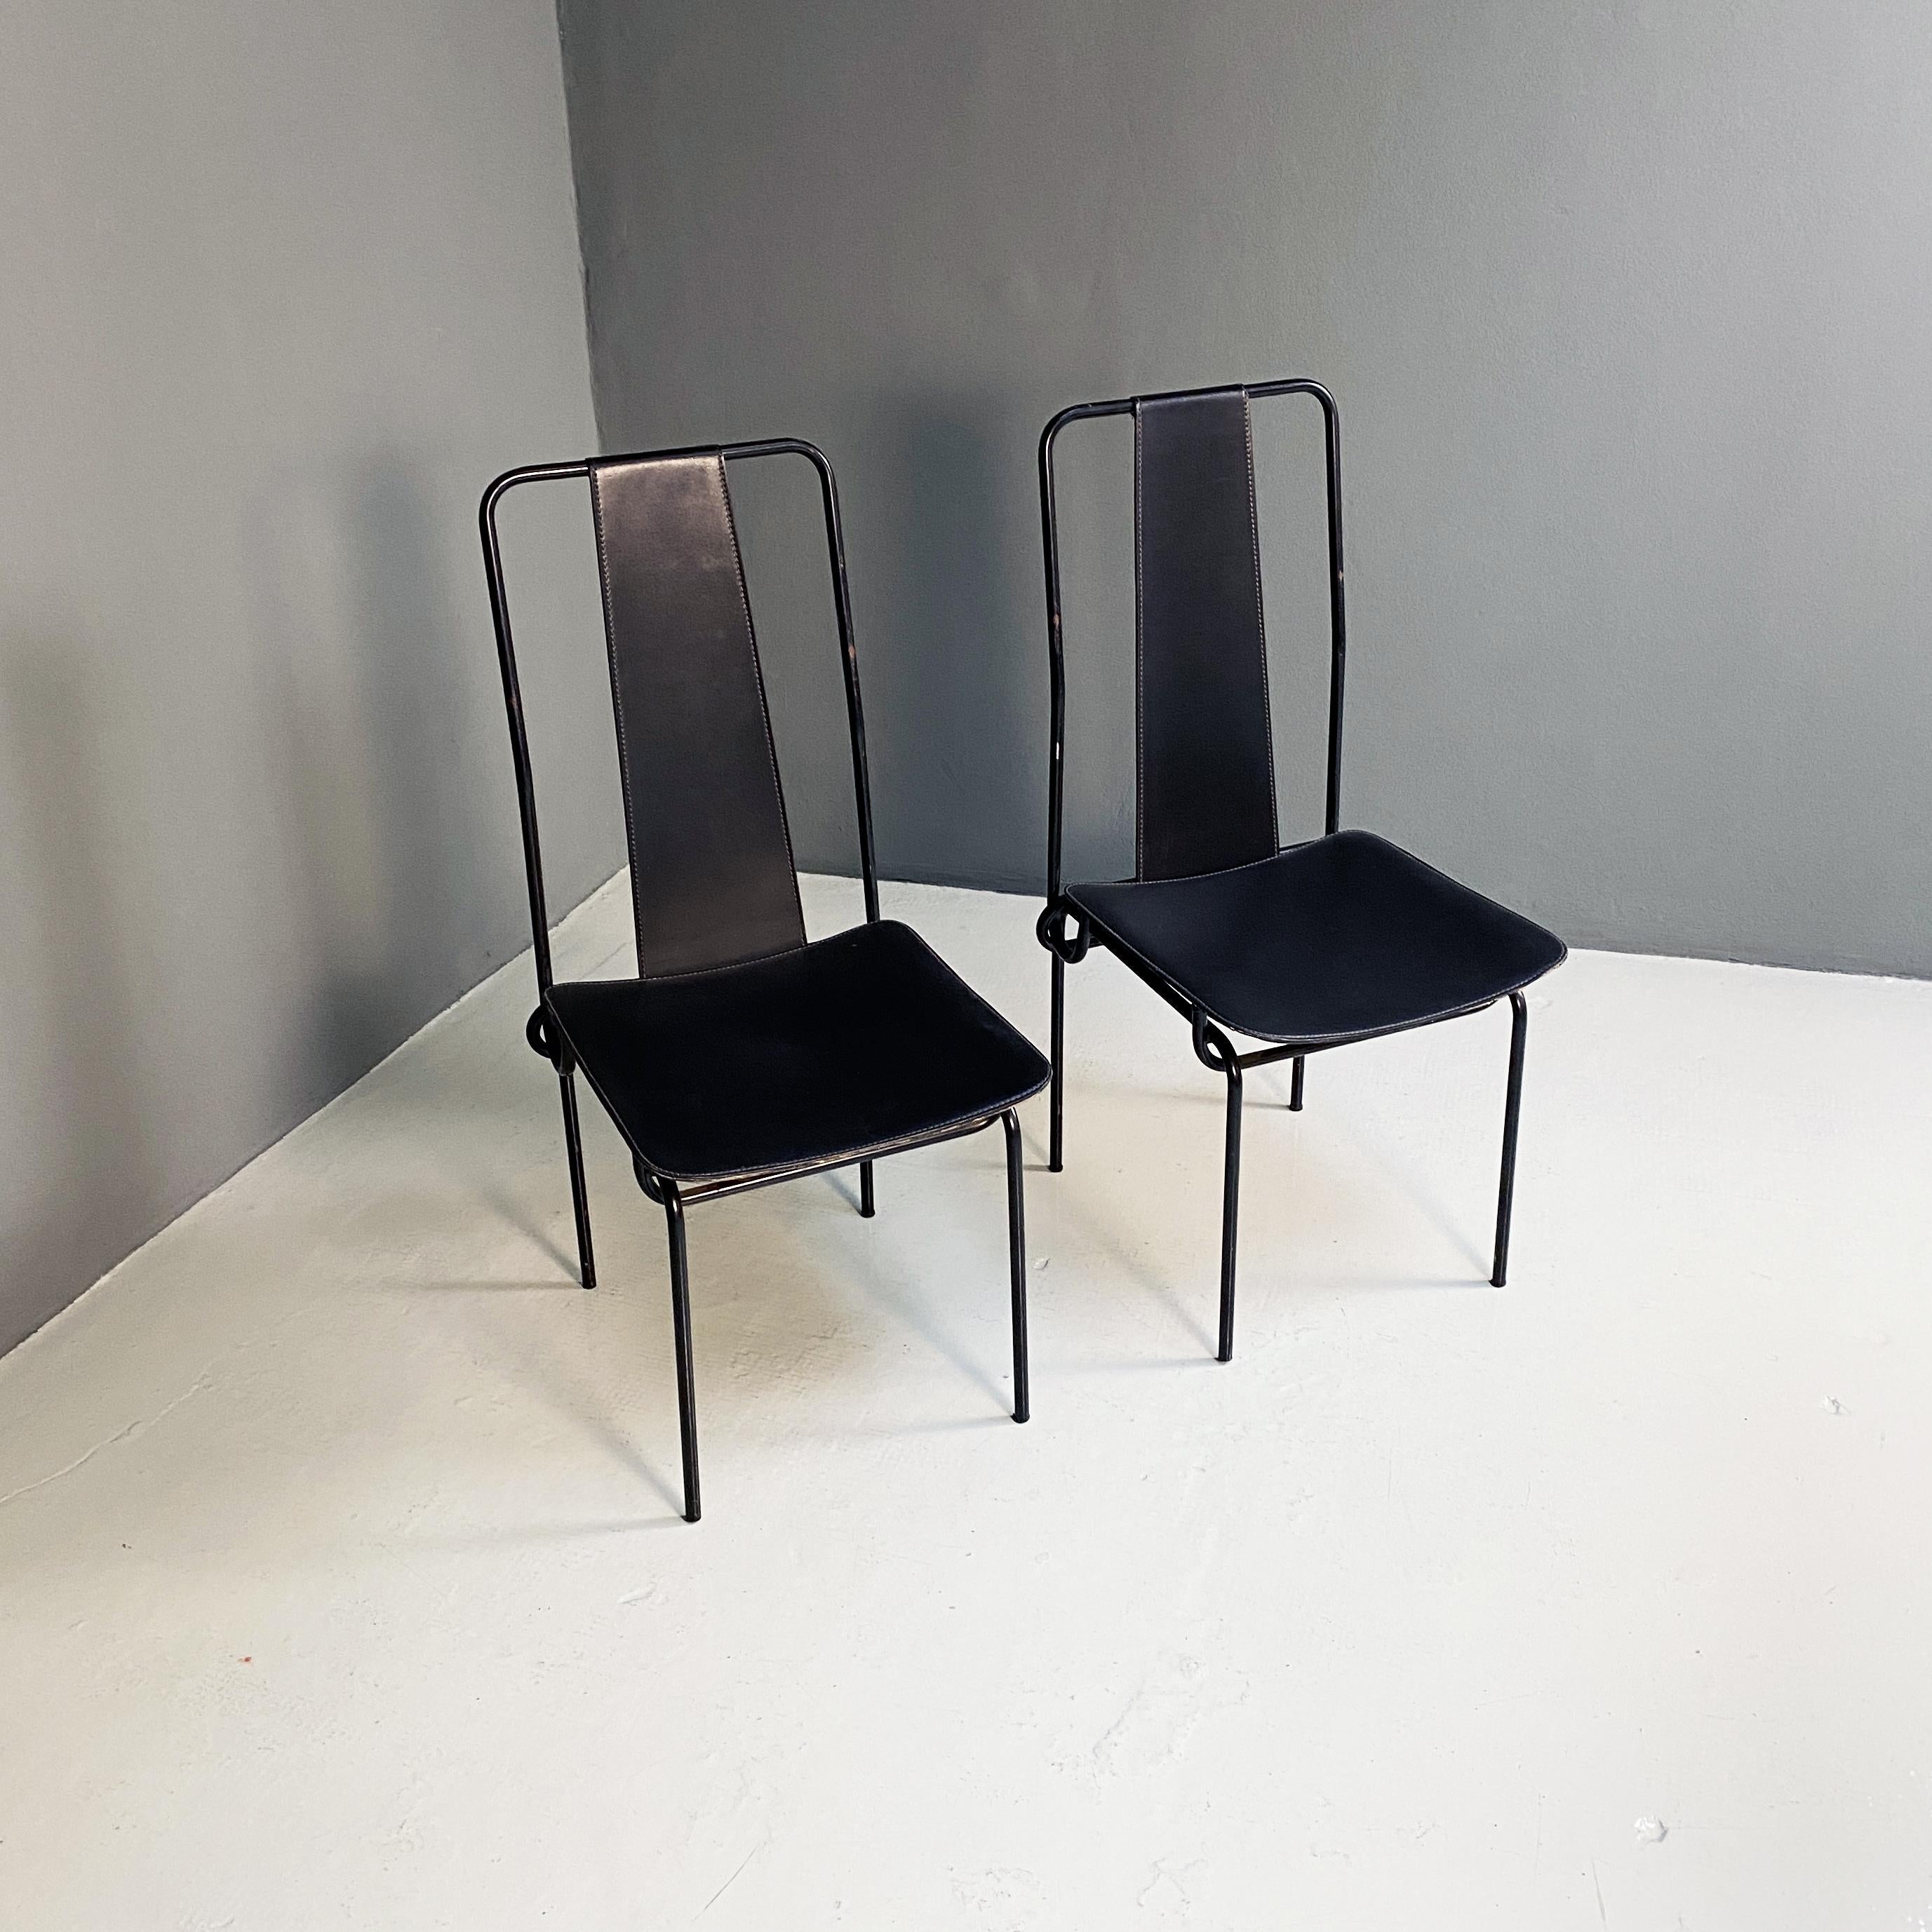 Modern Italian modern Black chairs by Adalberto del Lago for Misura Emme, 1980s For Sale